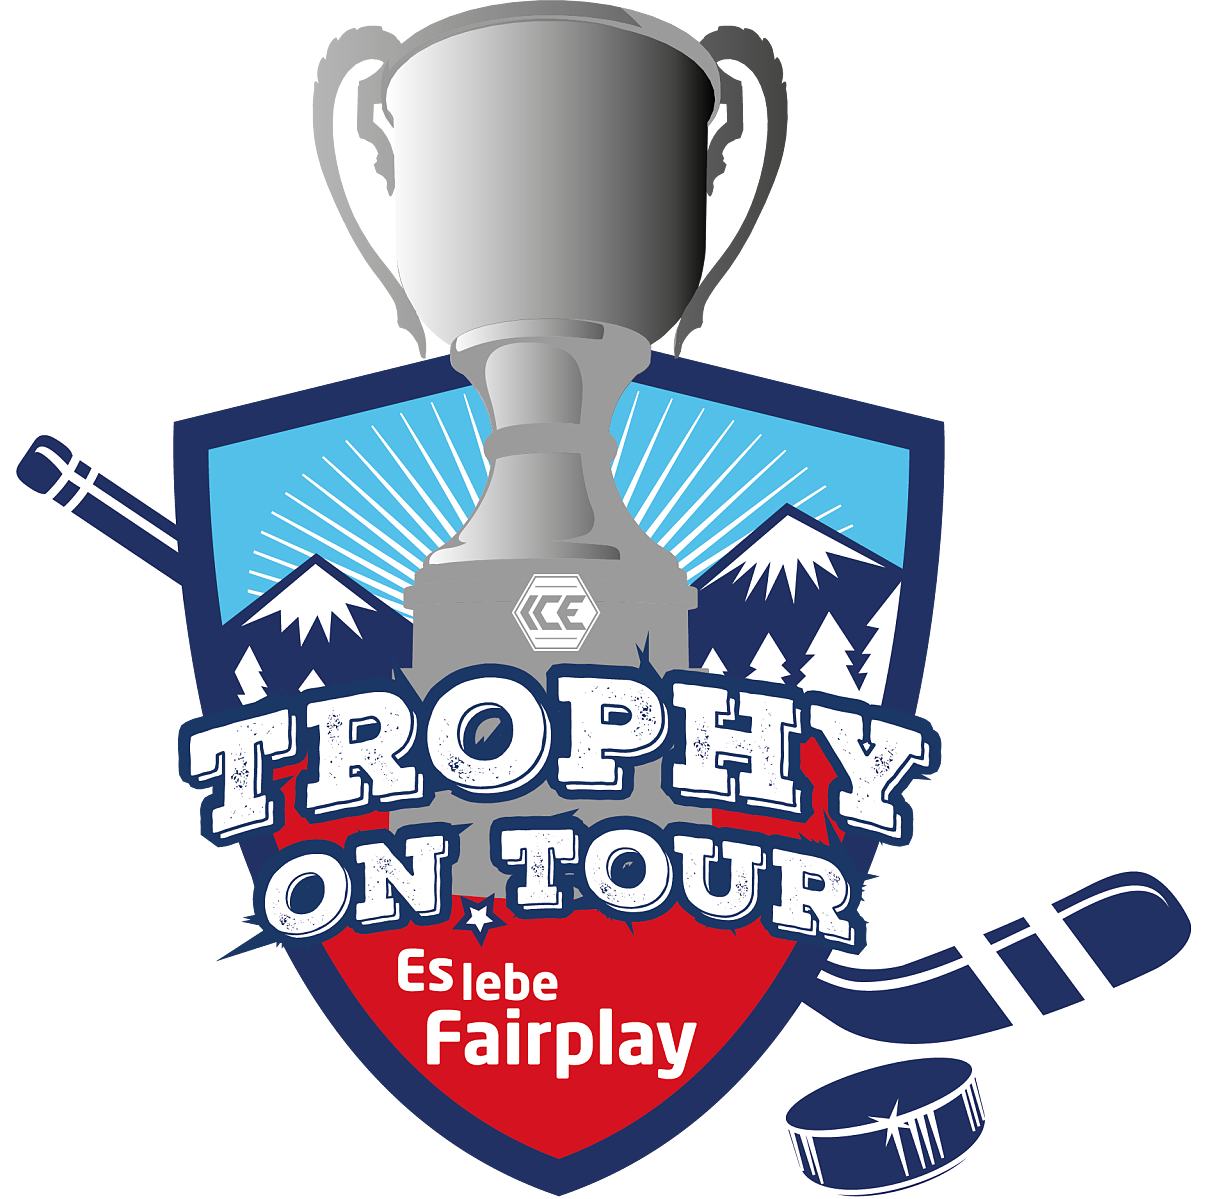 es lebe fairplay_trophy on tour